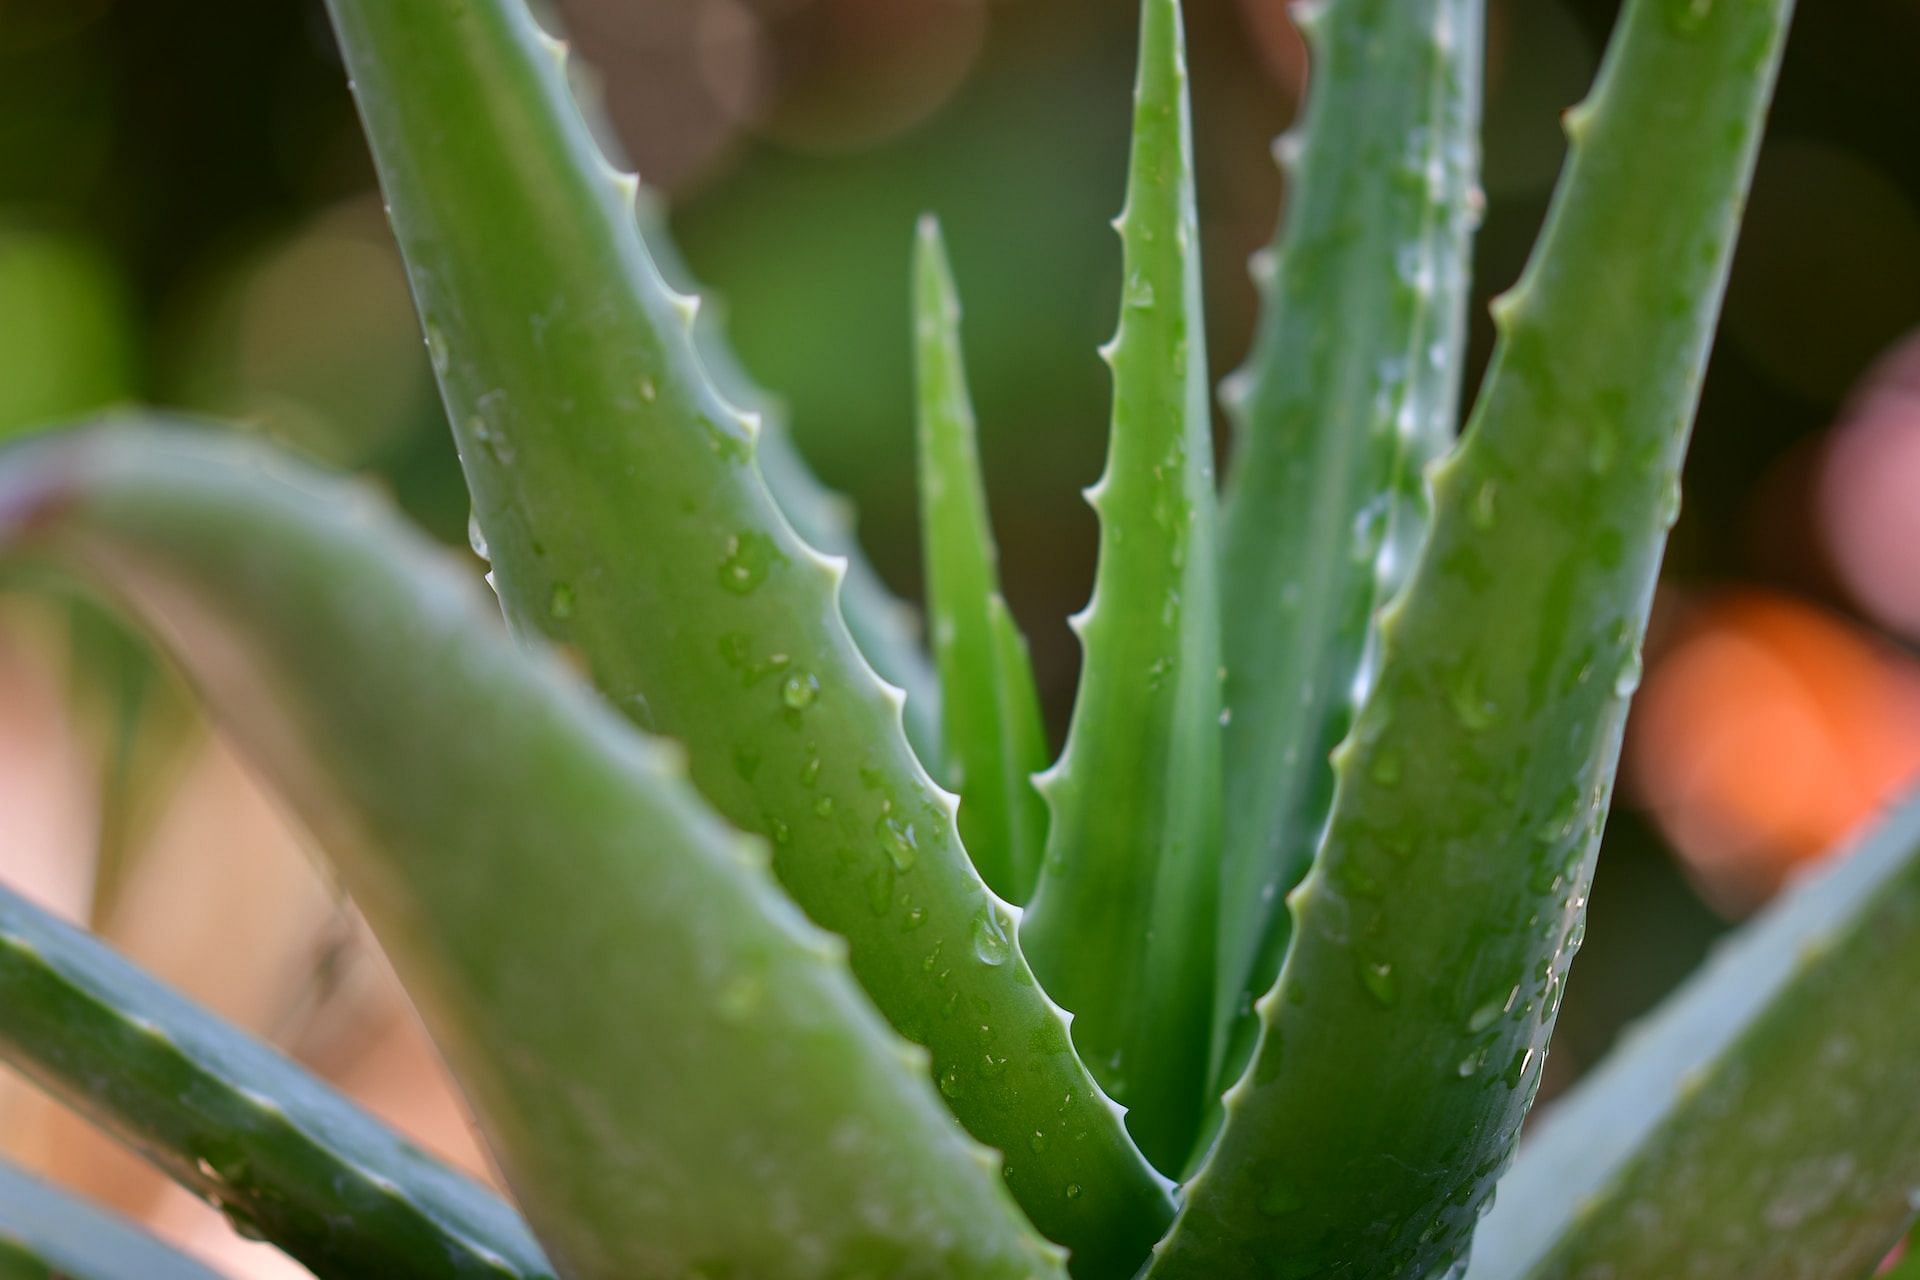 Aloe vera gel can brighten the skin. (Photo via Unsplash/Pisauikan)